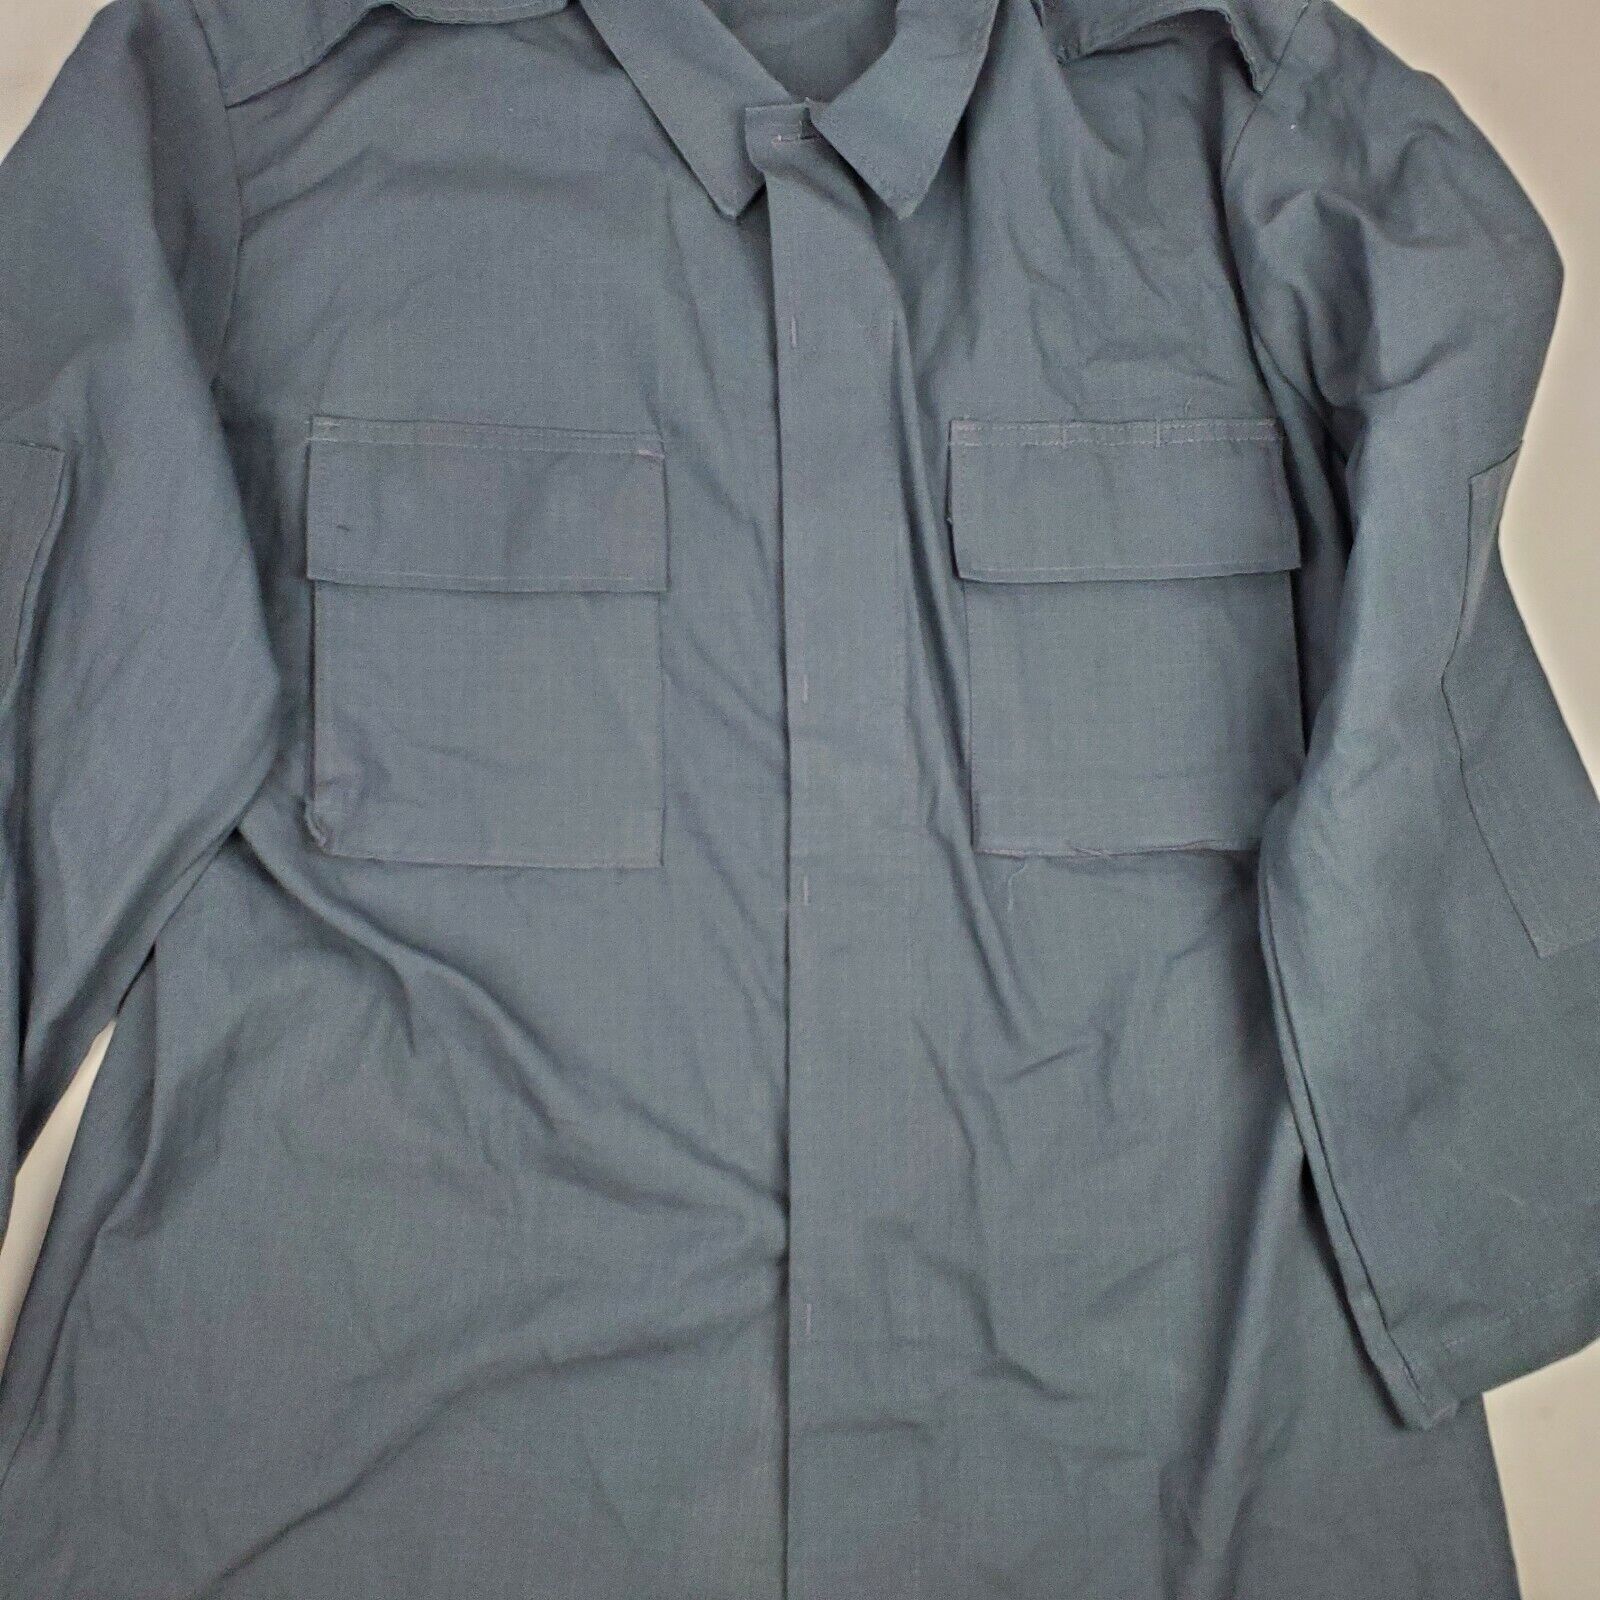 NWOT Military Tactical Shirt Grey Combat Coat Sz Medium Regular Long Sleeve USA Без бренда - фотография #3